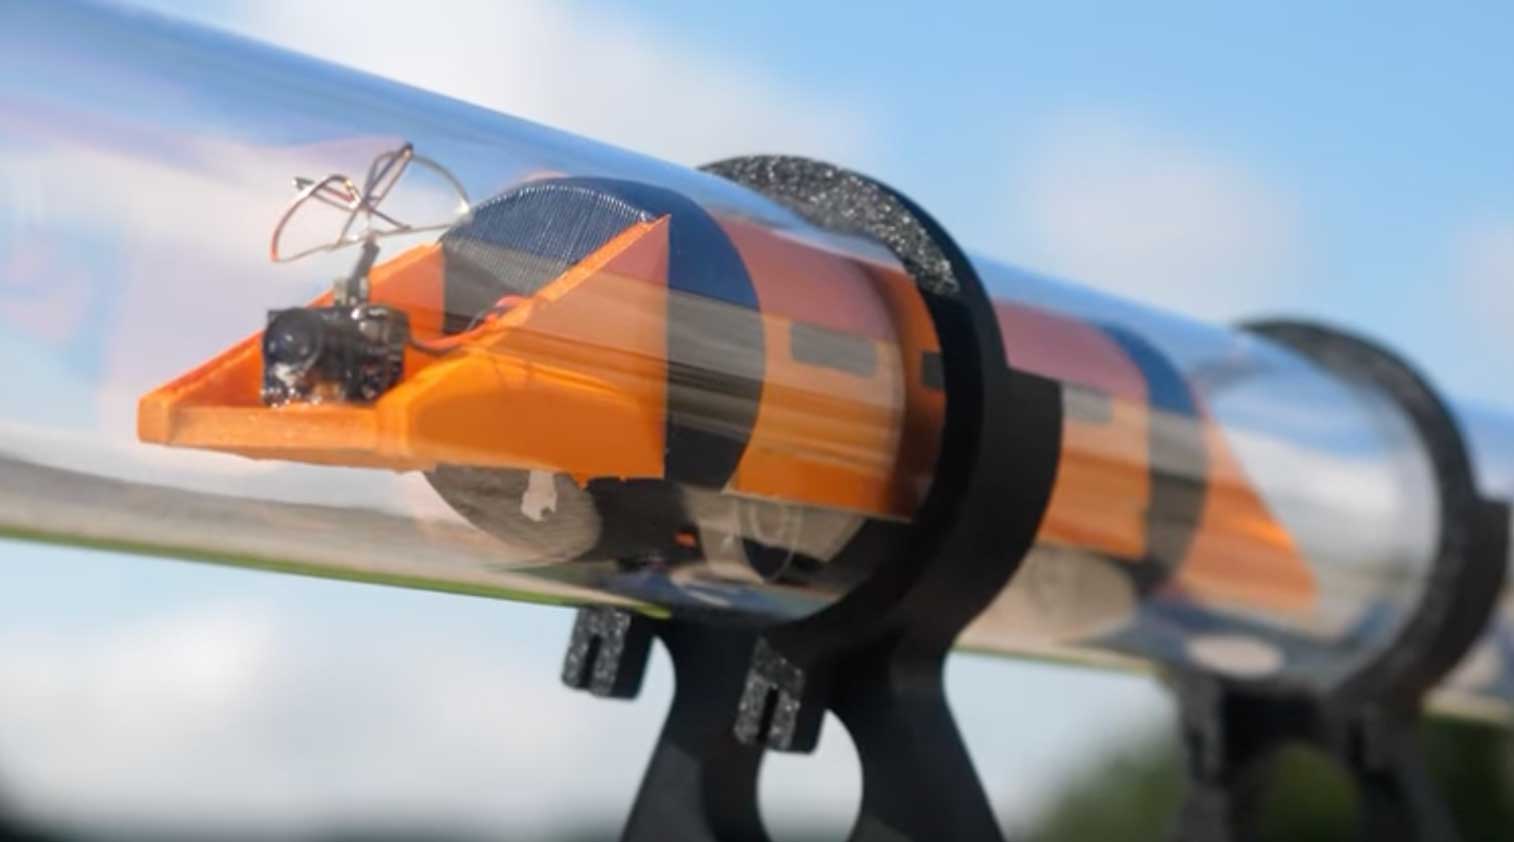 Maker builds Hyperloop model using 3D printing technology